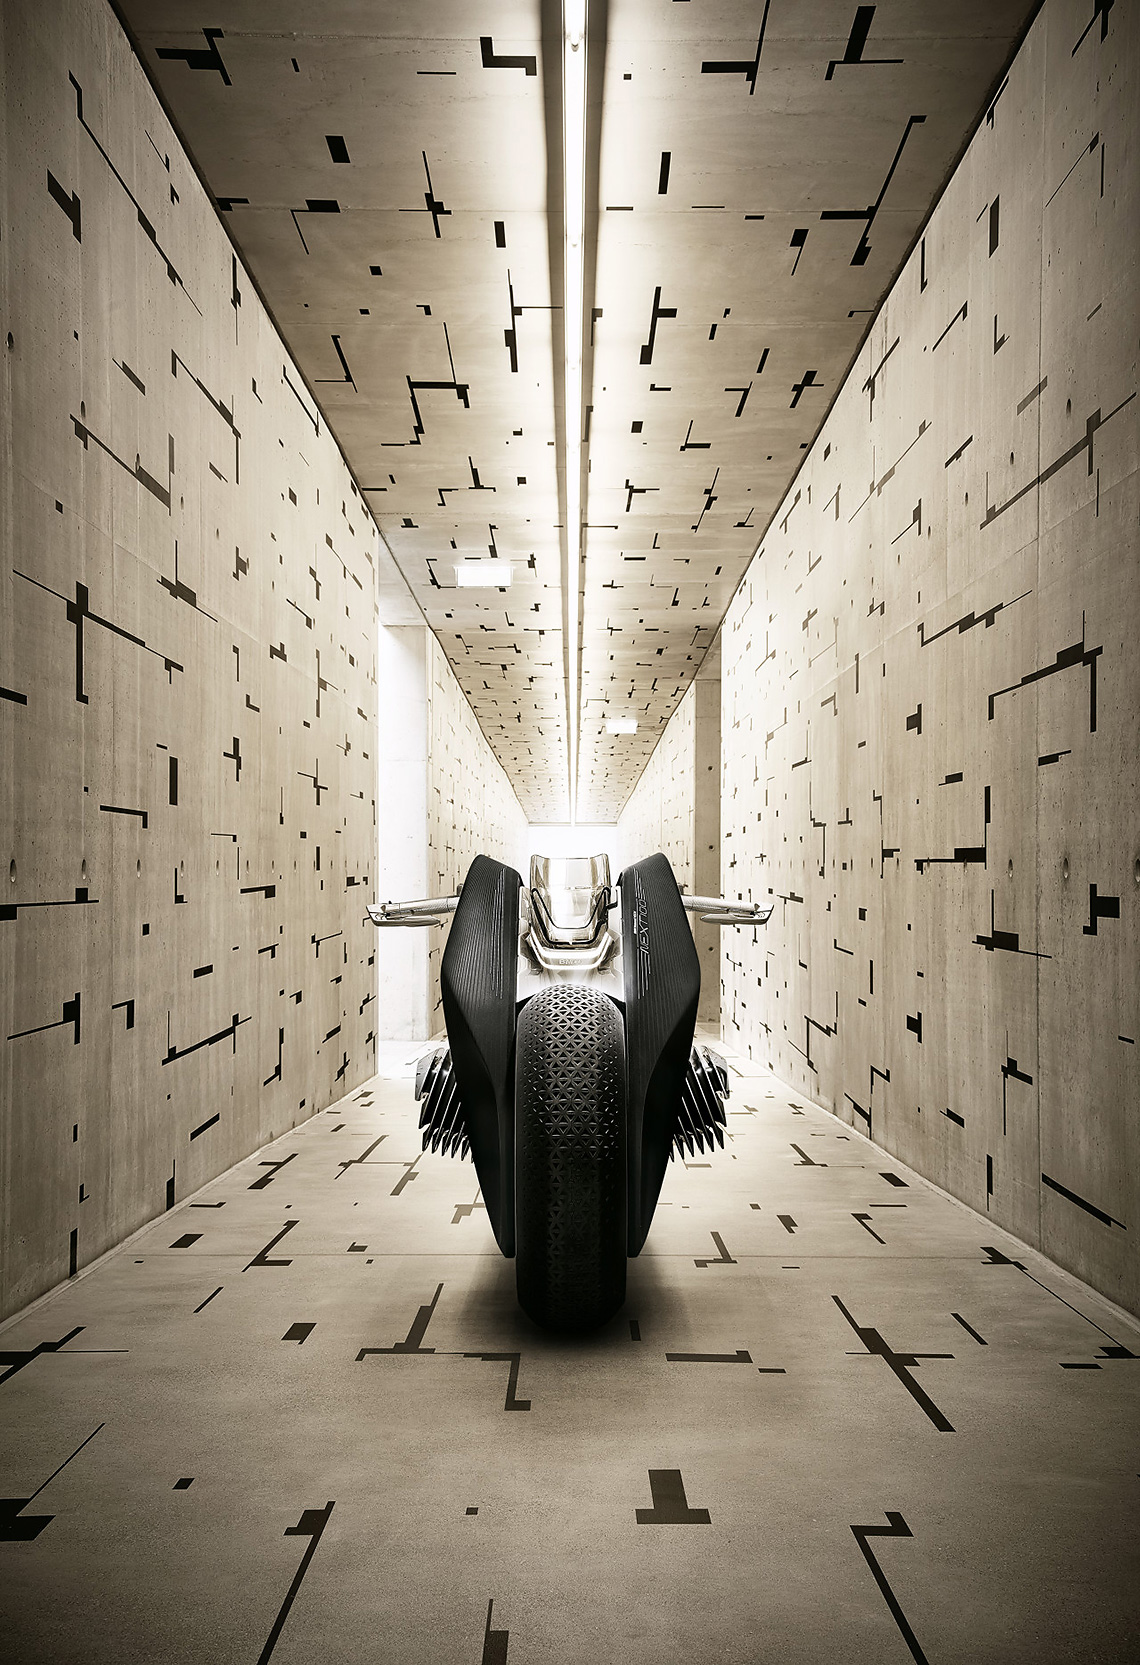 konsept motosiklet BMW Motorrad Vision Next 100.